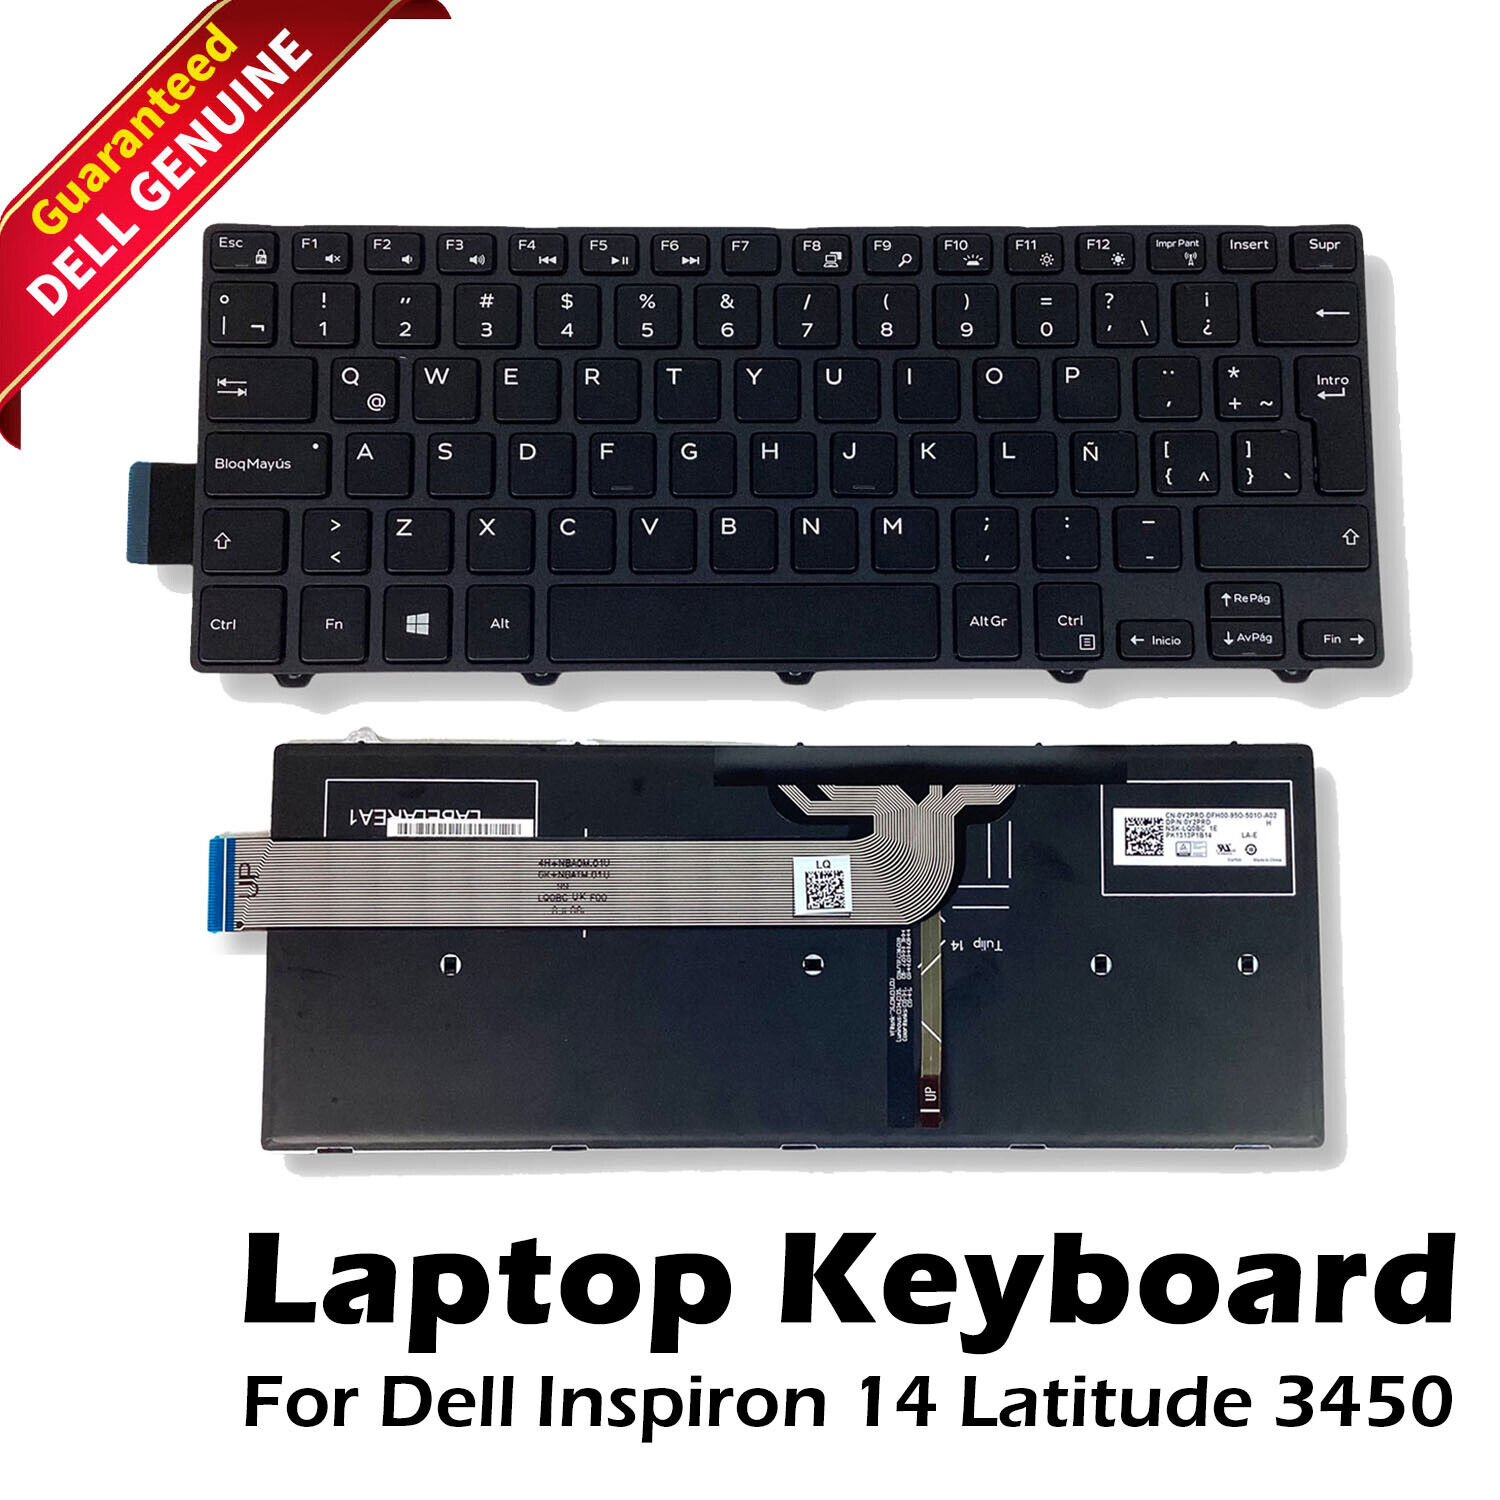 New Dell Inspiron 14 3000 Spanish Latin American Backlit Laptop Keyboard Y2PRD